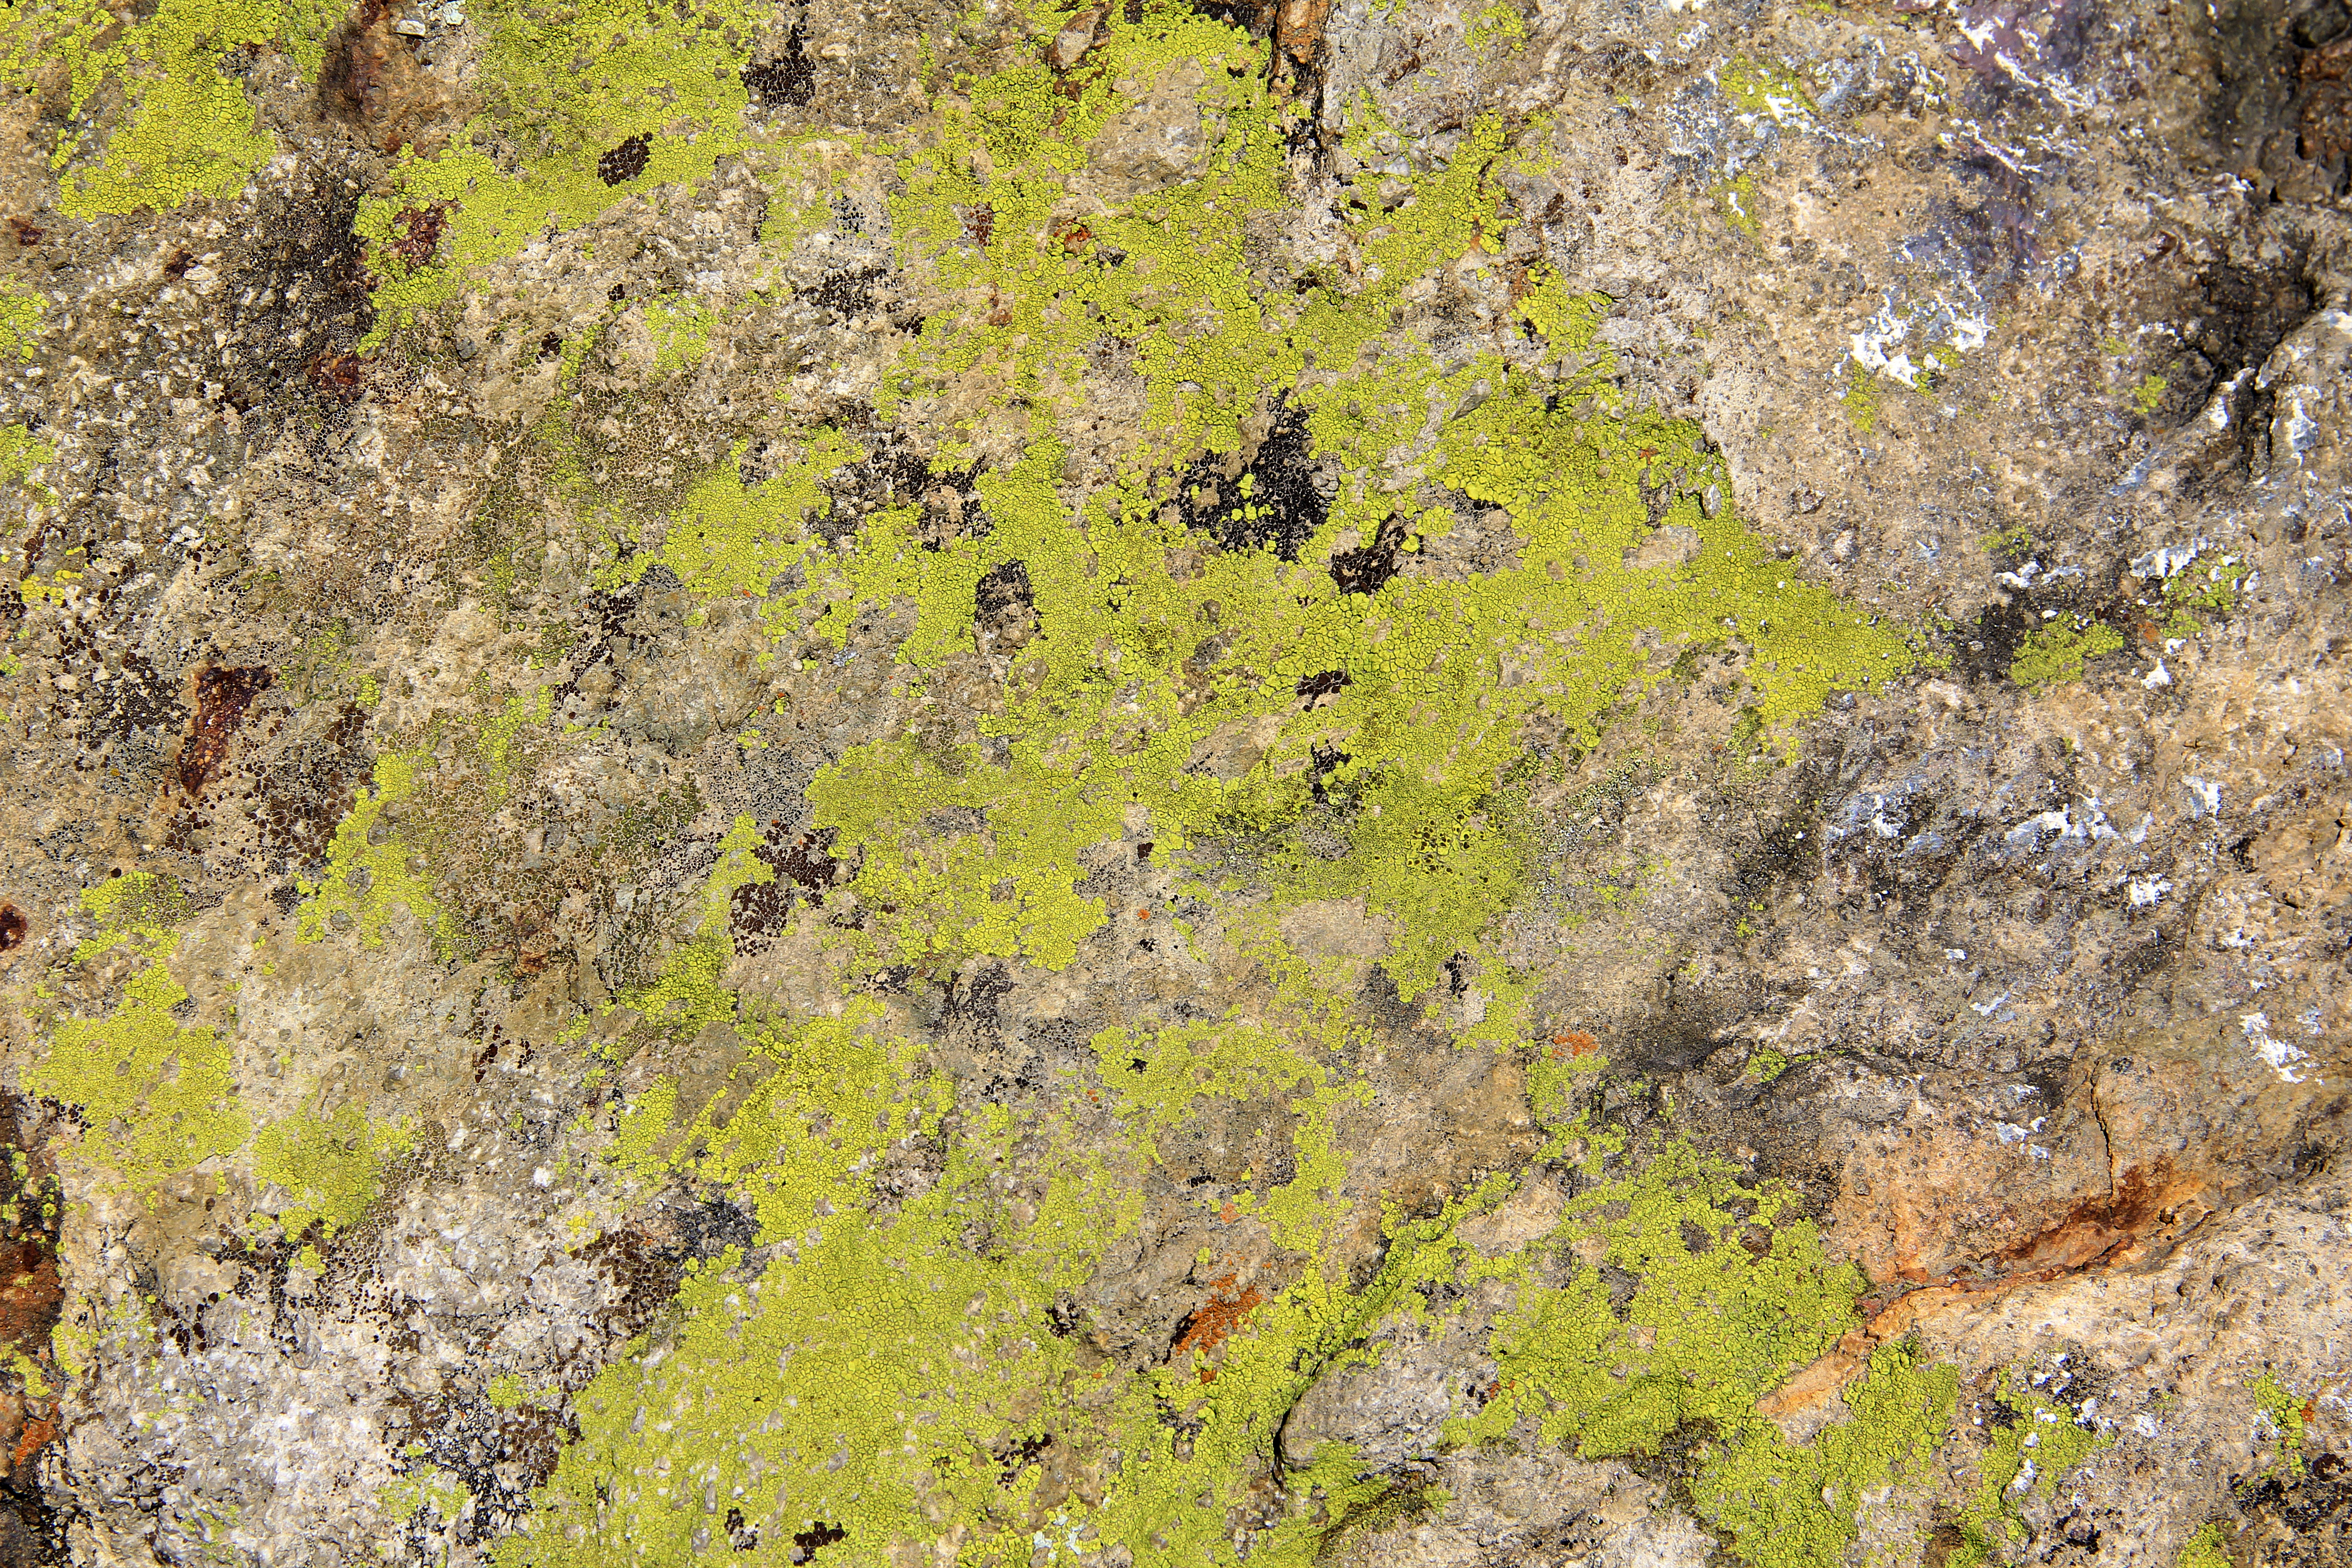 https://www.texturex.com/wp-content/uploads/2018/03/TextureX-rock-algae-moss-macro-stone-grunge-camo-city-Texture-1.jpg